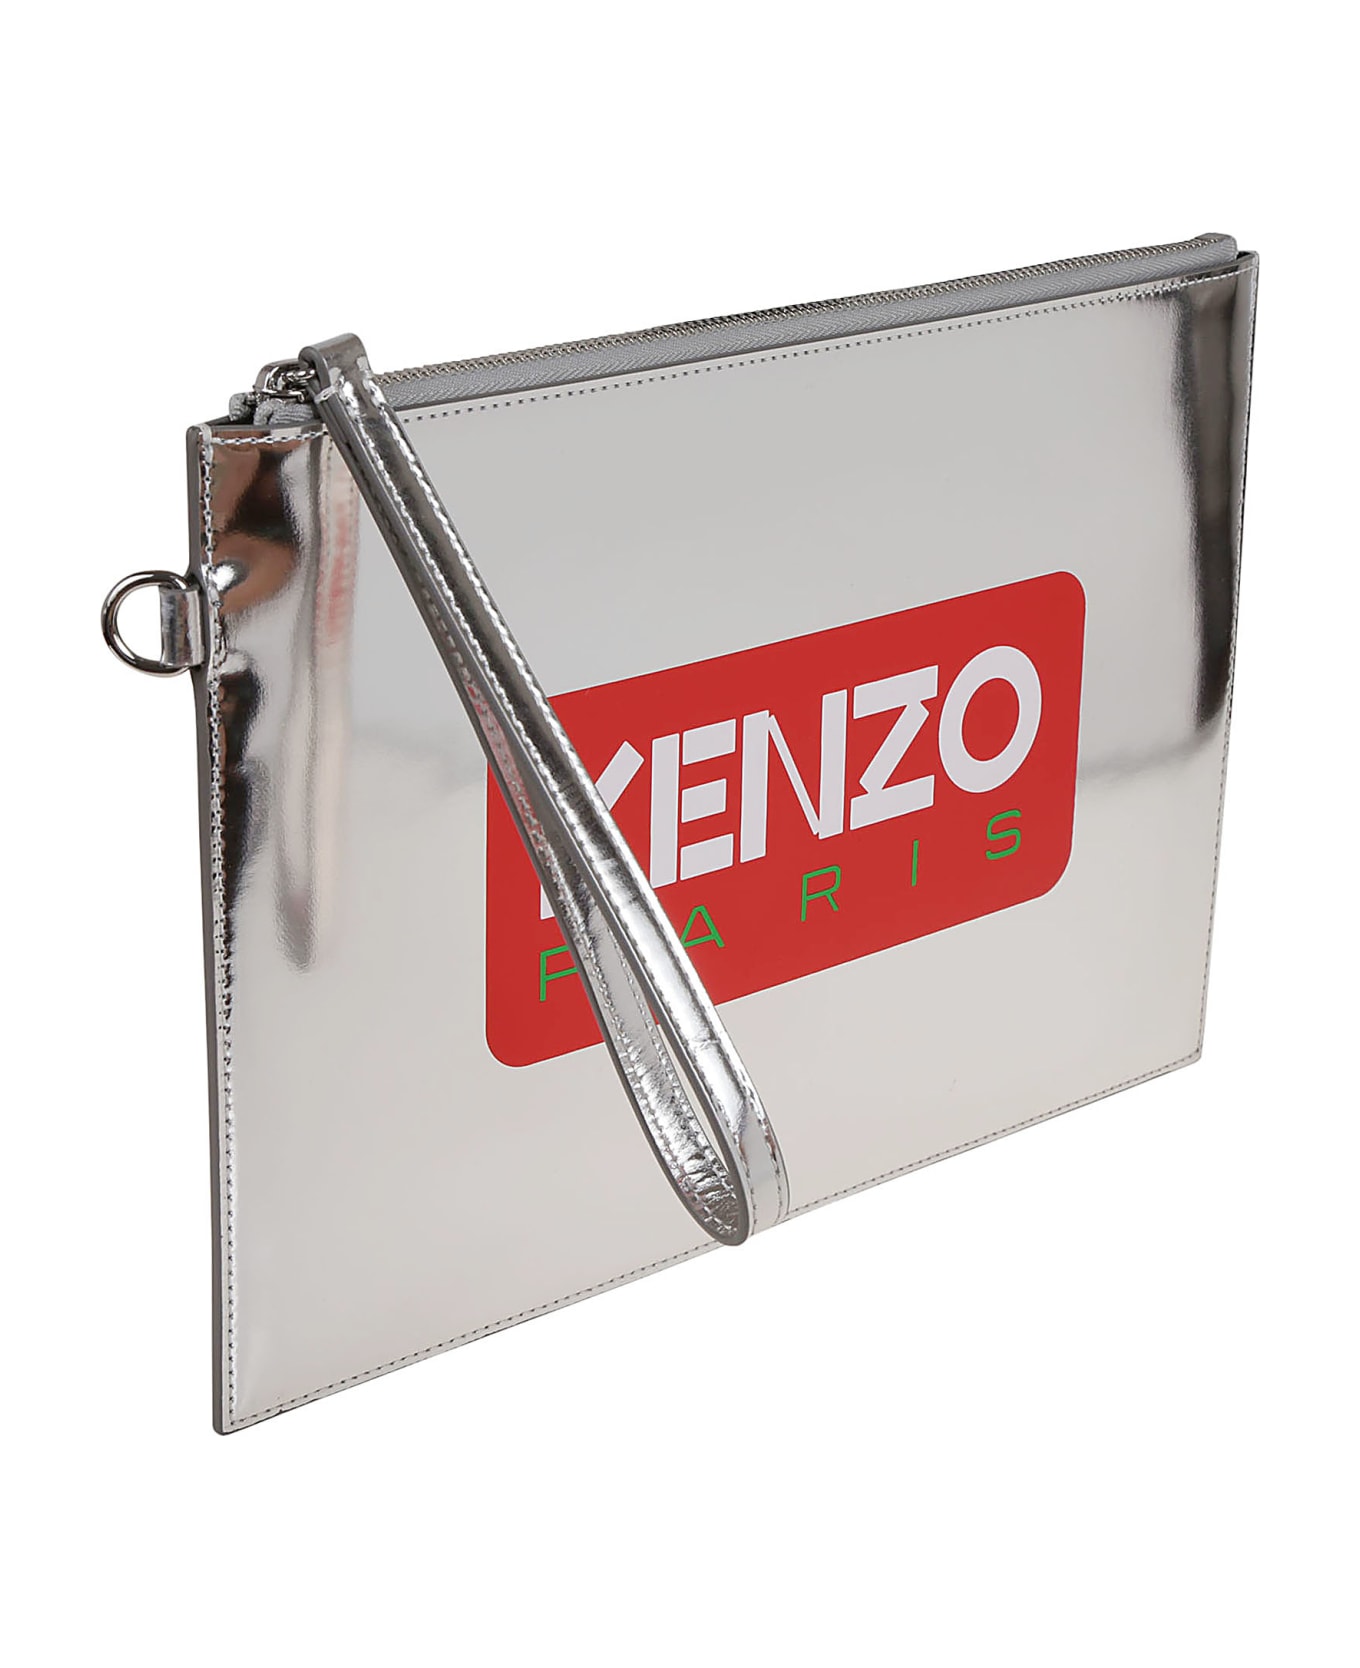 Kenzo Large Logo Printed Clutch Bag - Ag Argent